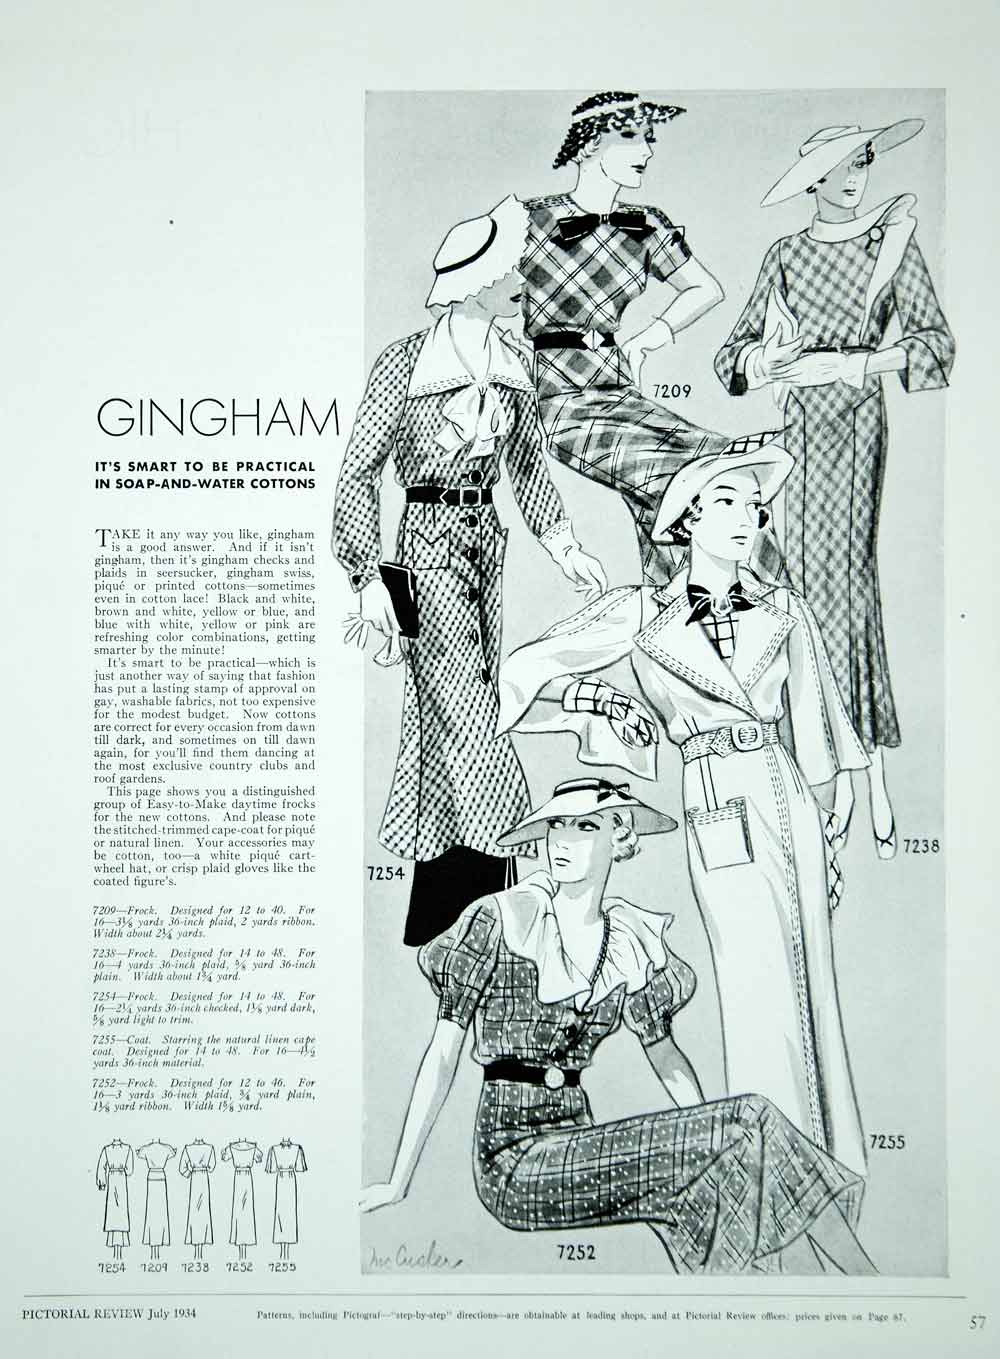 1929 Article Art Deco Women Corset Twenties Era Fashion Clothing